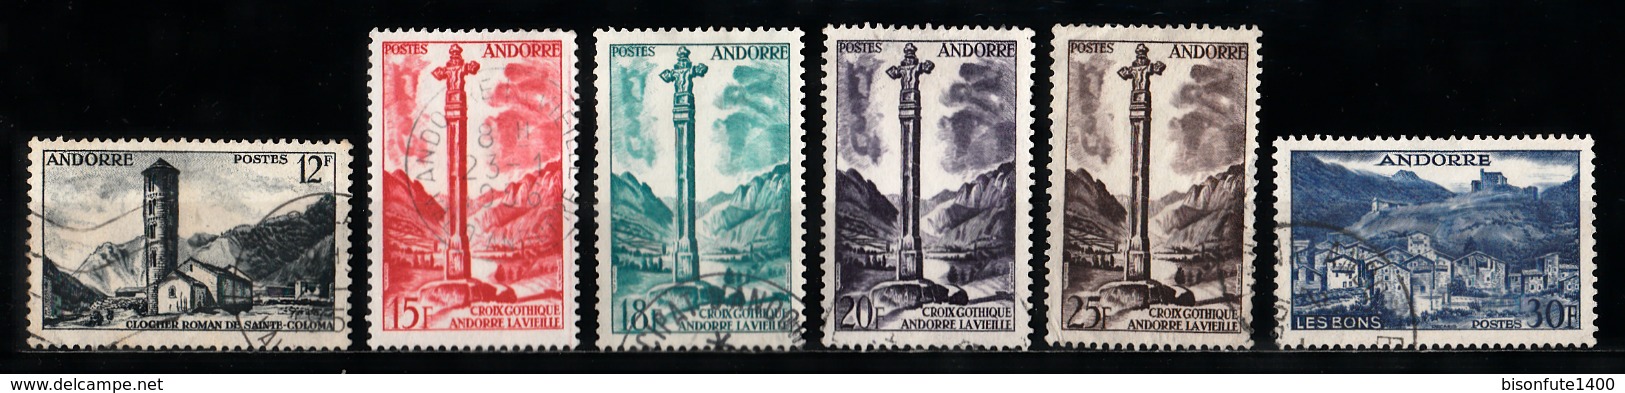 Andorre Français 1955 - 1958 : Timbres Yvert & Tellier N° 138 - 139 - 141 - 143 - 144 - 145 - 146 - 147 - 148 - 149 -... - Gebraucht